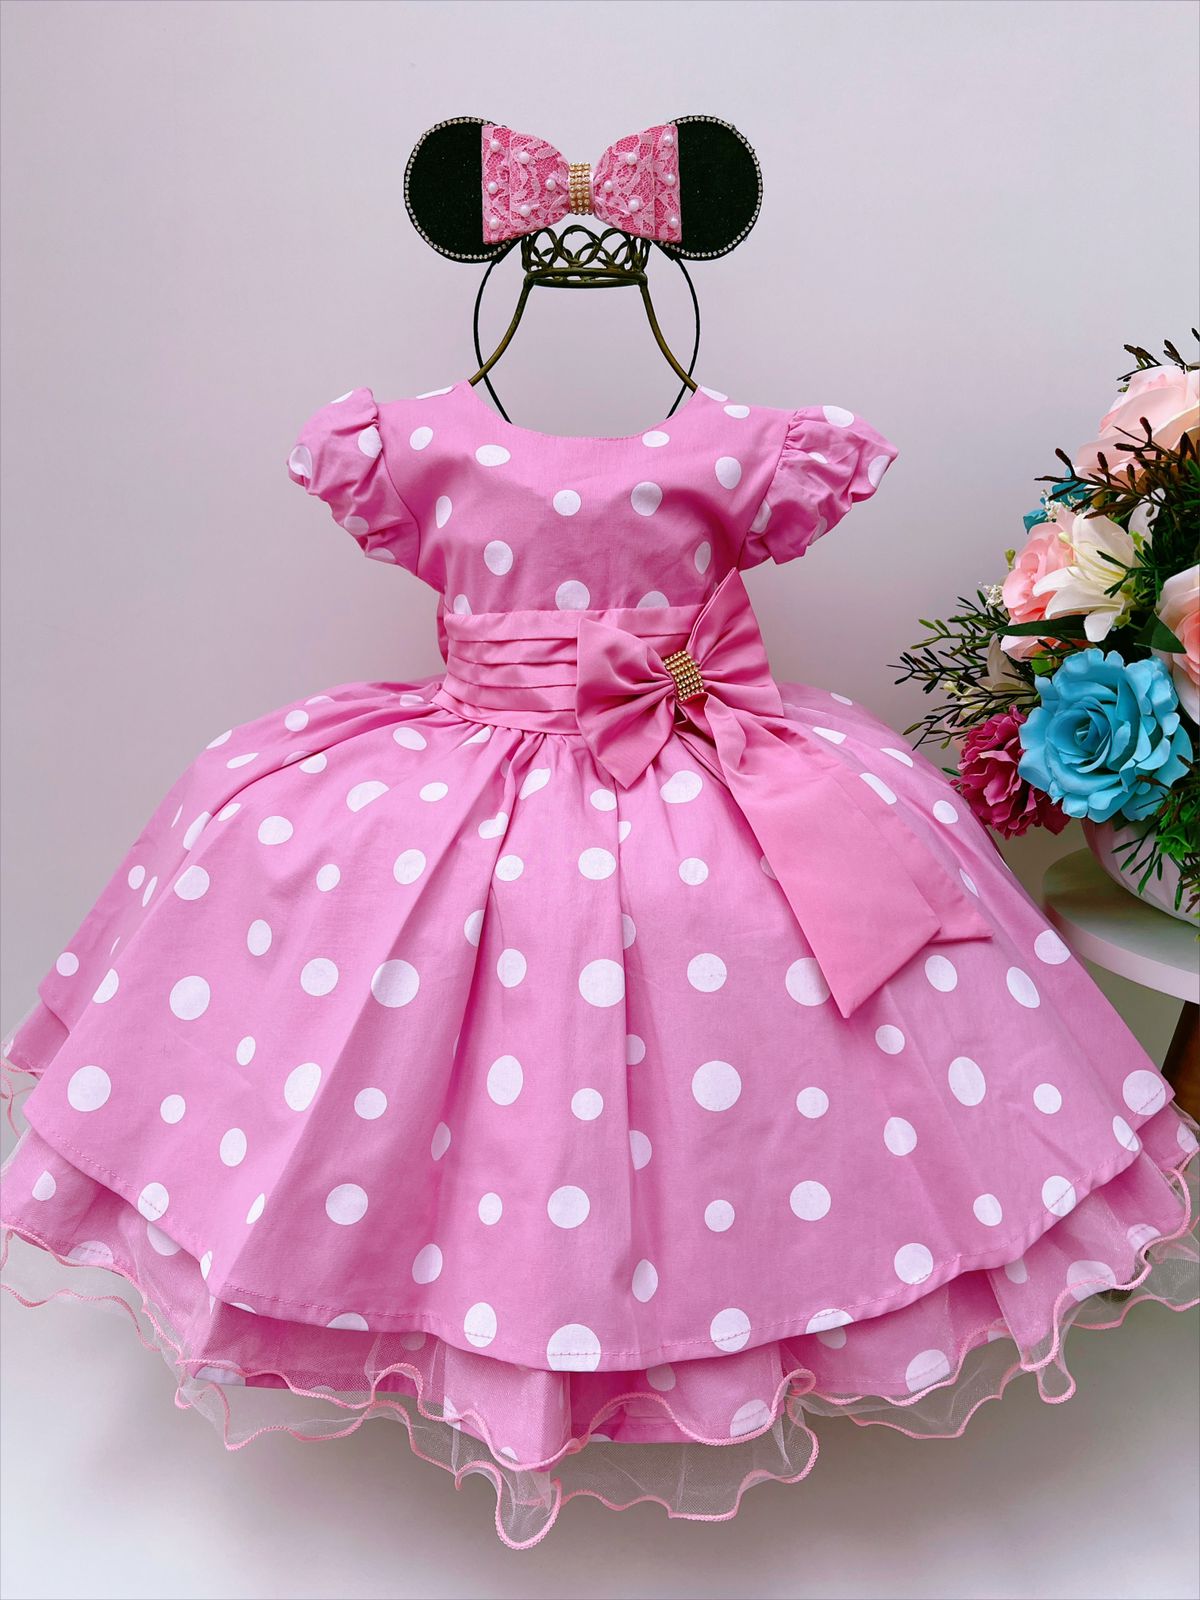 Vestido Infantil Minnie Rosa Bolas Brancas Luxo Princesas